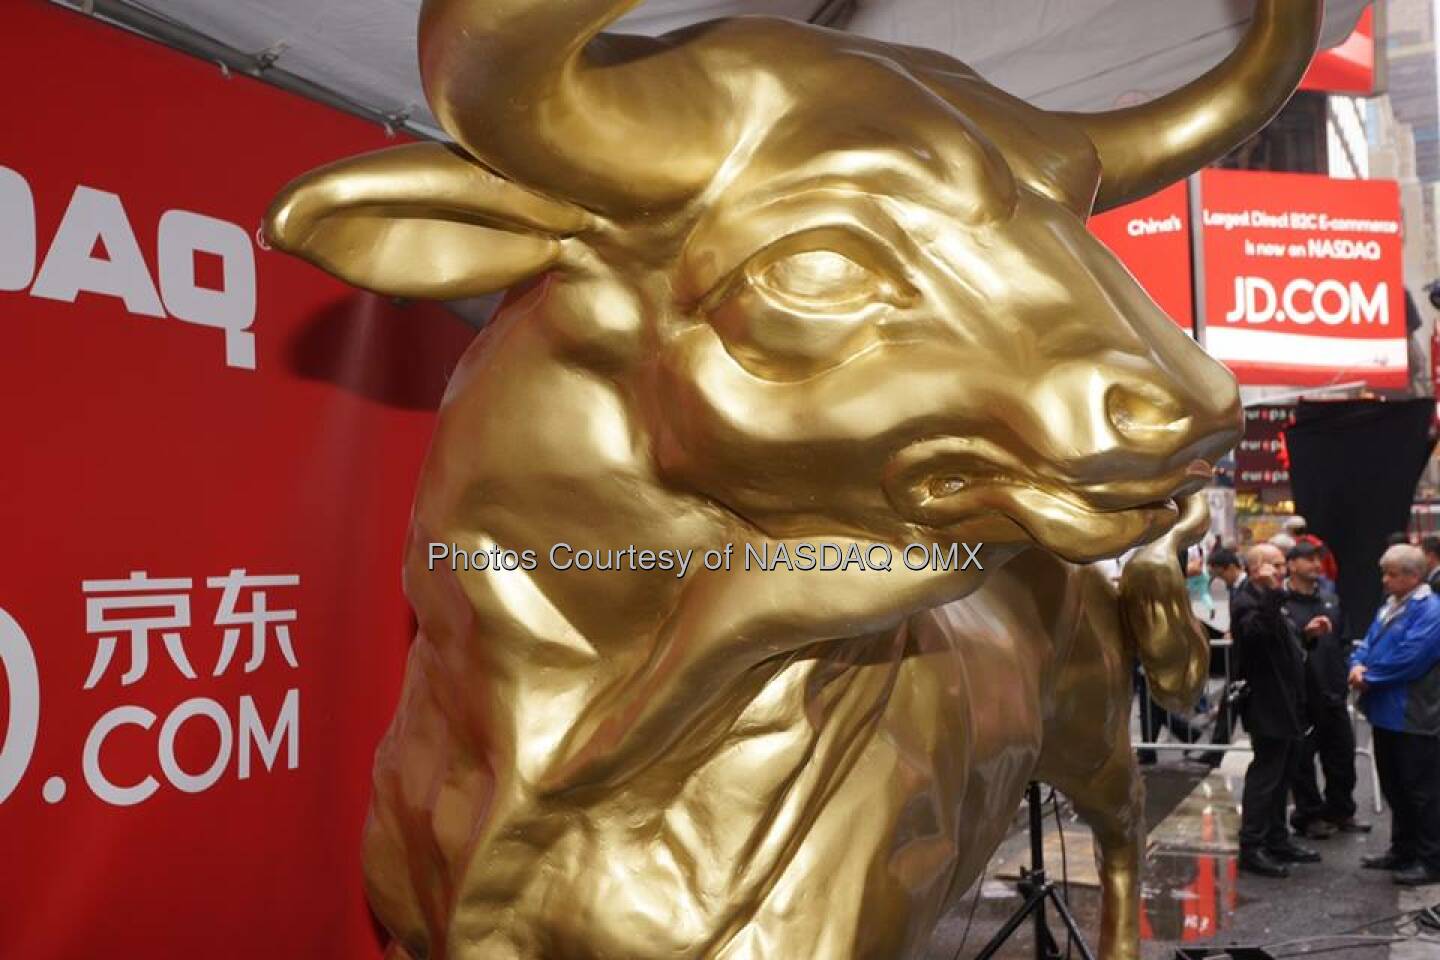 Goldener Bulle: JD.com Golden Bull Source: http://facebook.com/NASDAQ